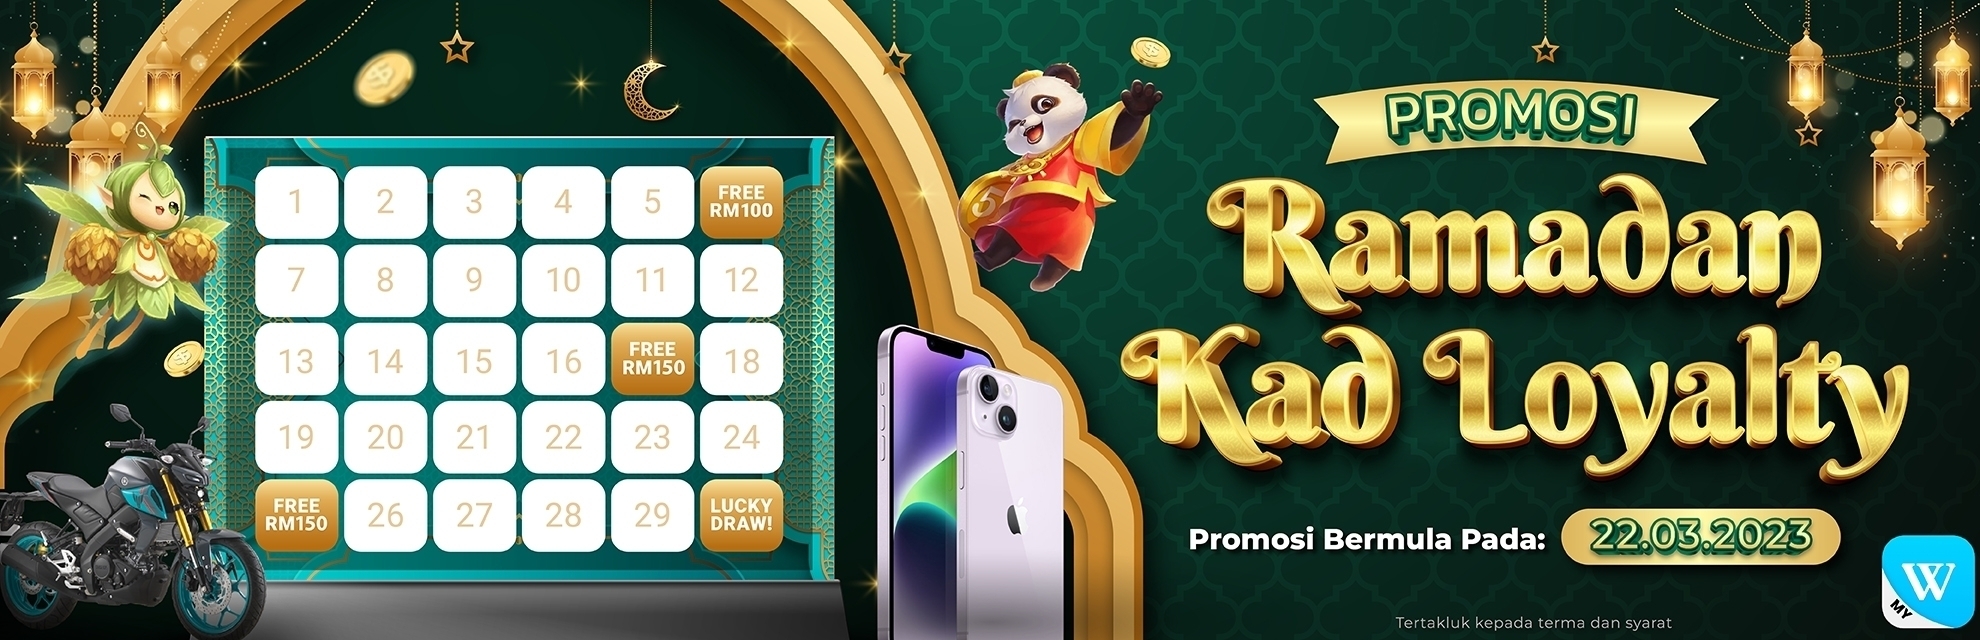 Ramadan-Promo-Banner-R1-R3